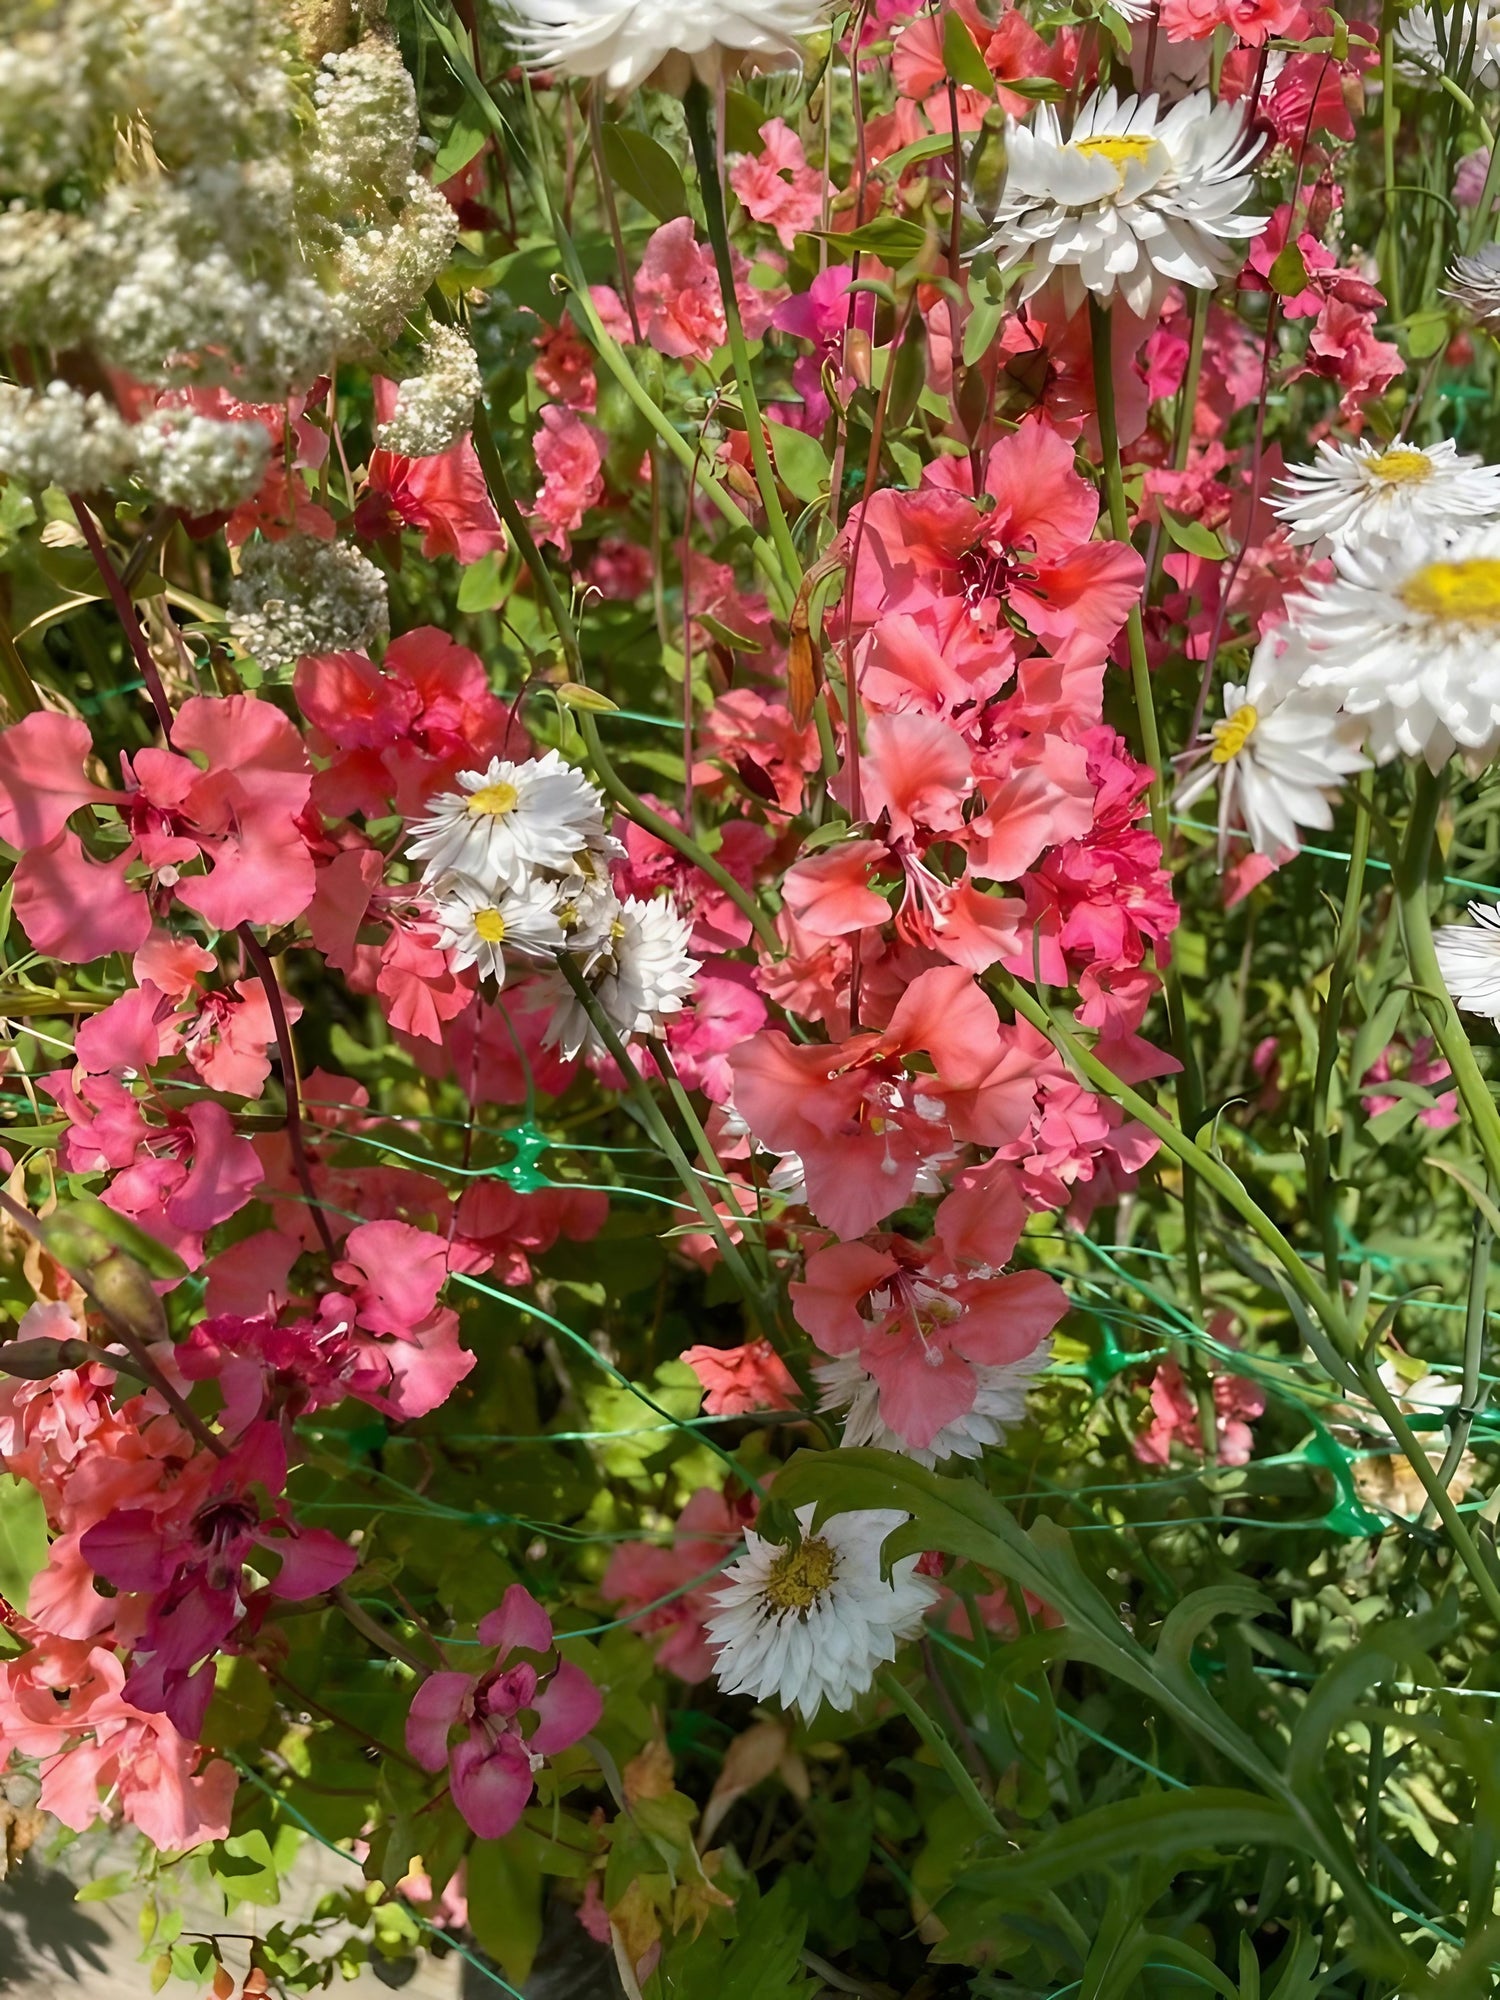 A diverse garden featuring an array of Clarkia Crown Double Mix flowers